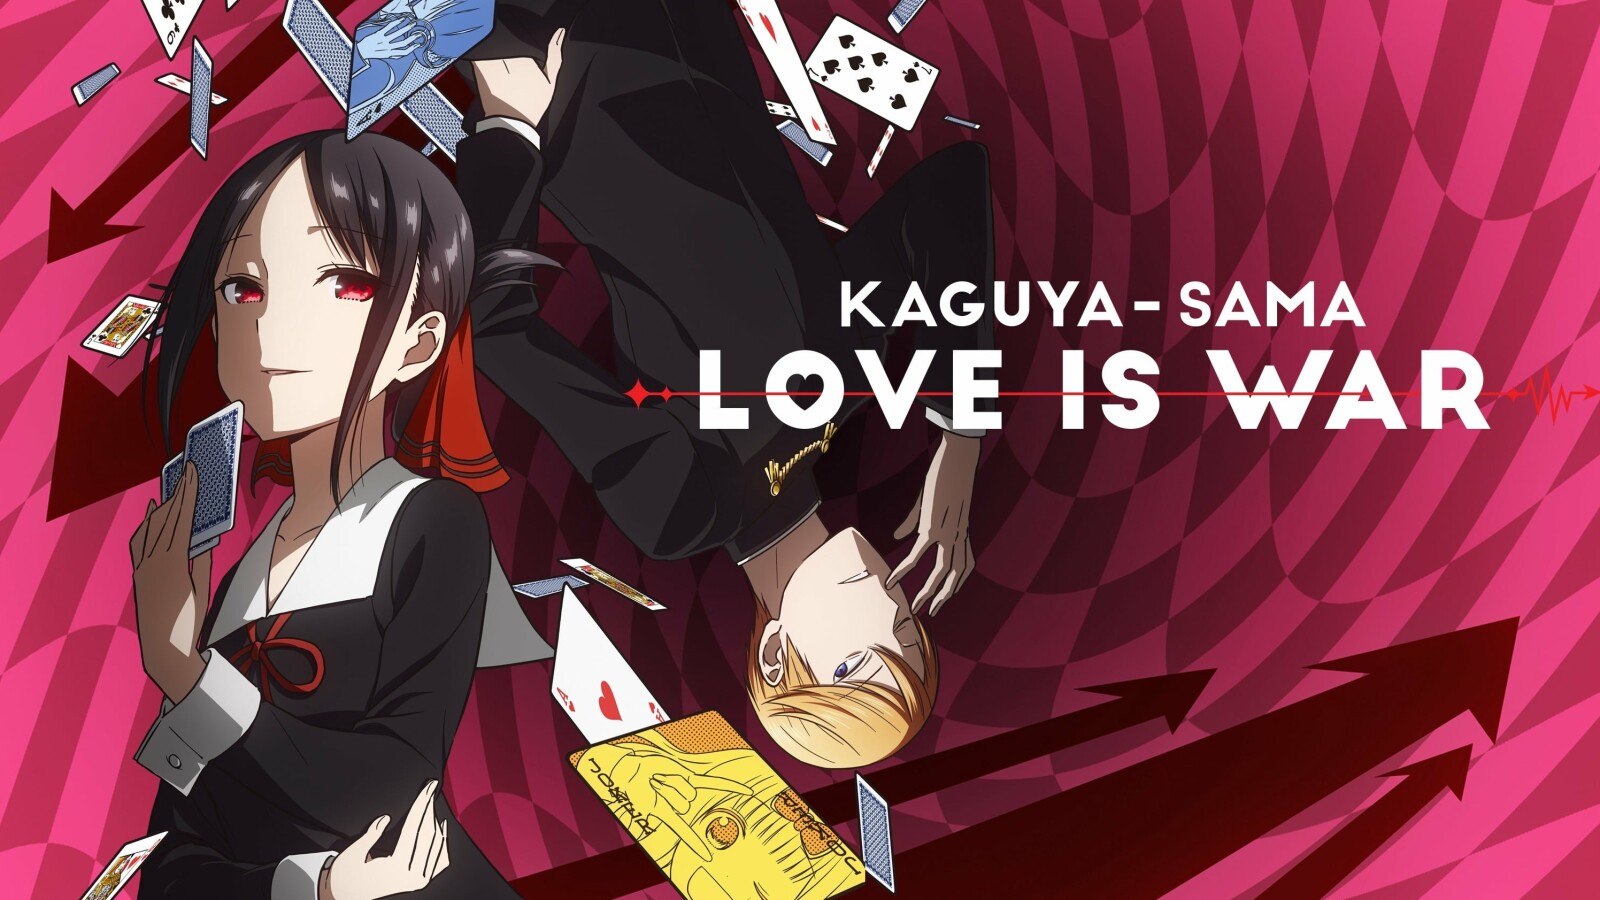 6. "Kaguya-sama: Love is War" anime series - wide 6